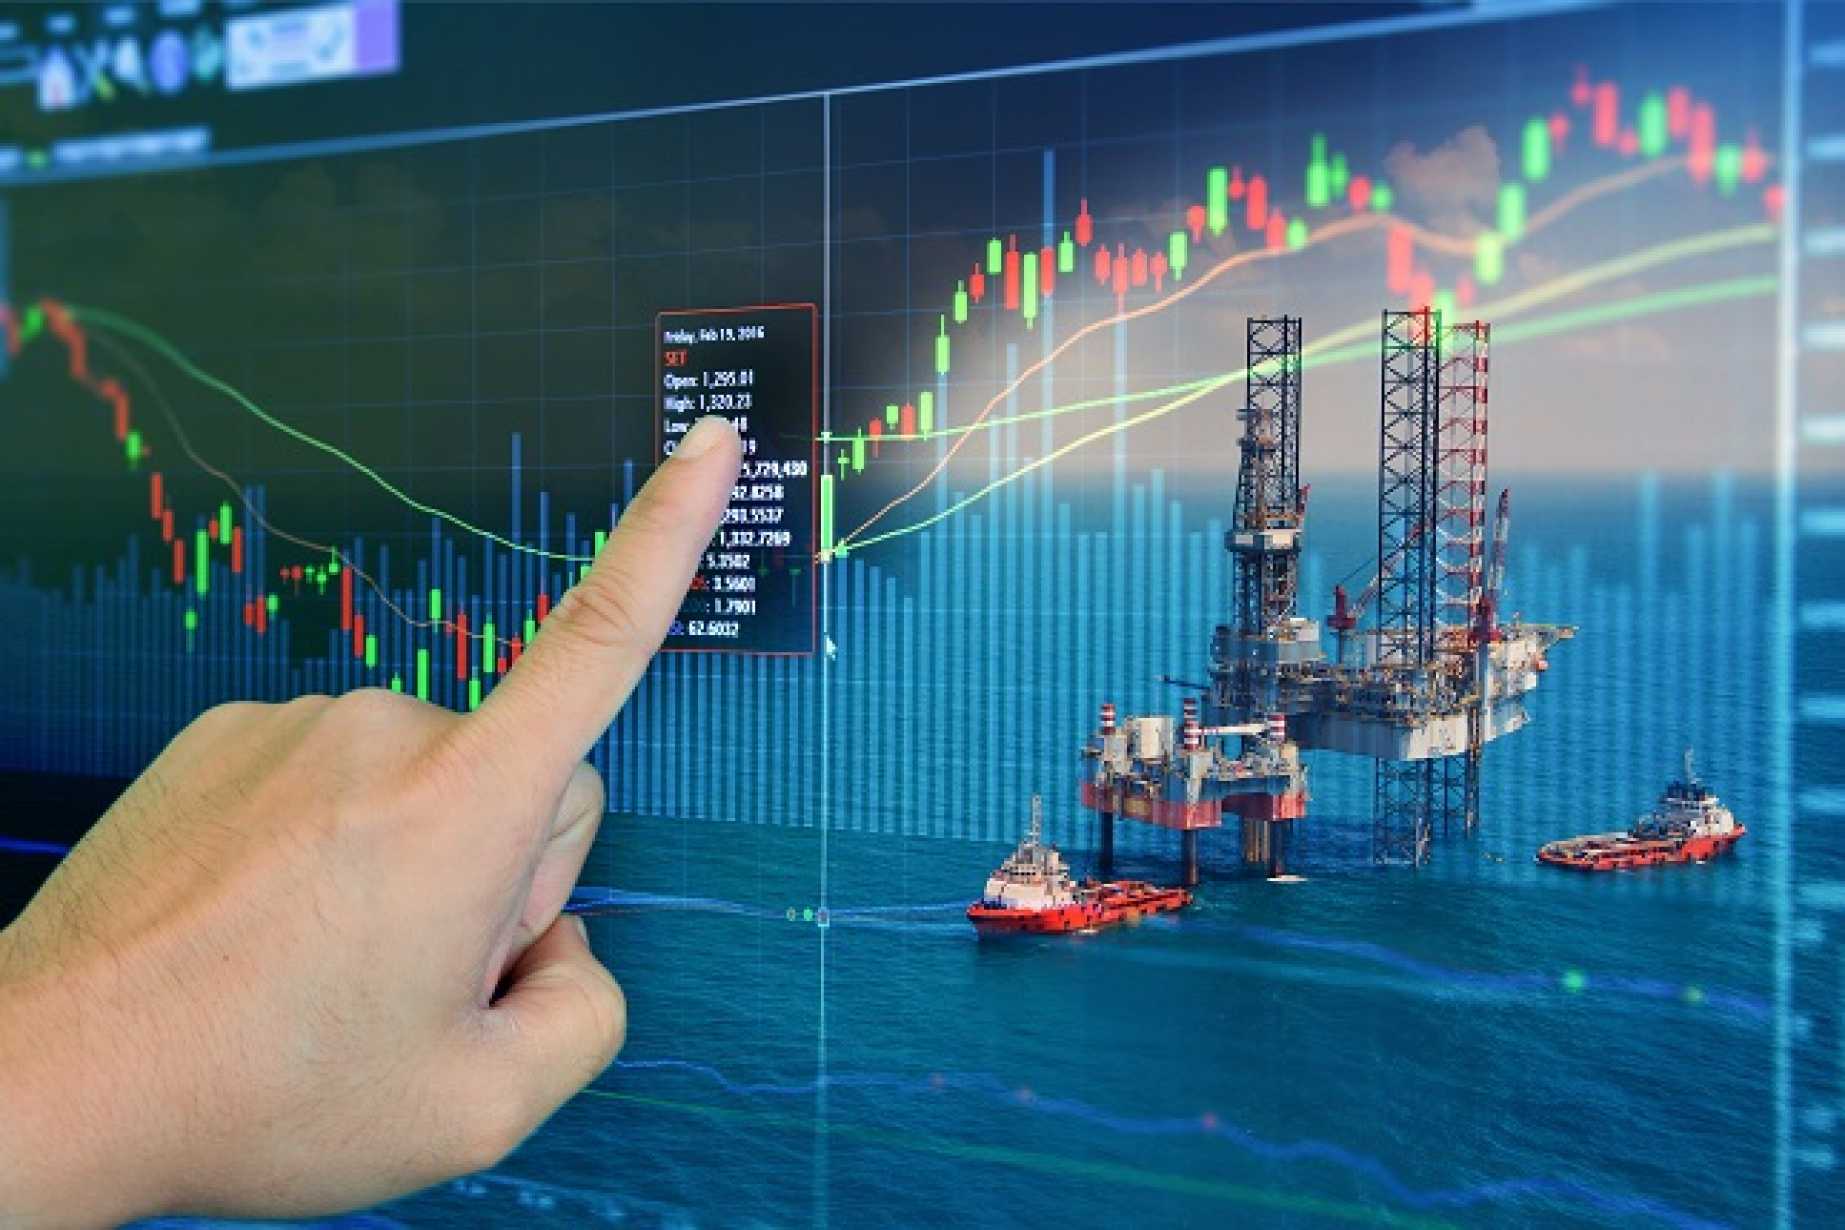 Crude Oil Price Forecast - Crude Oil Markets Continue to Test Upside